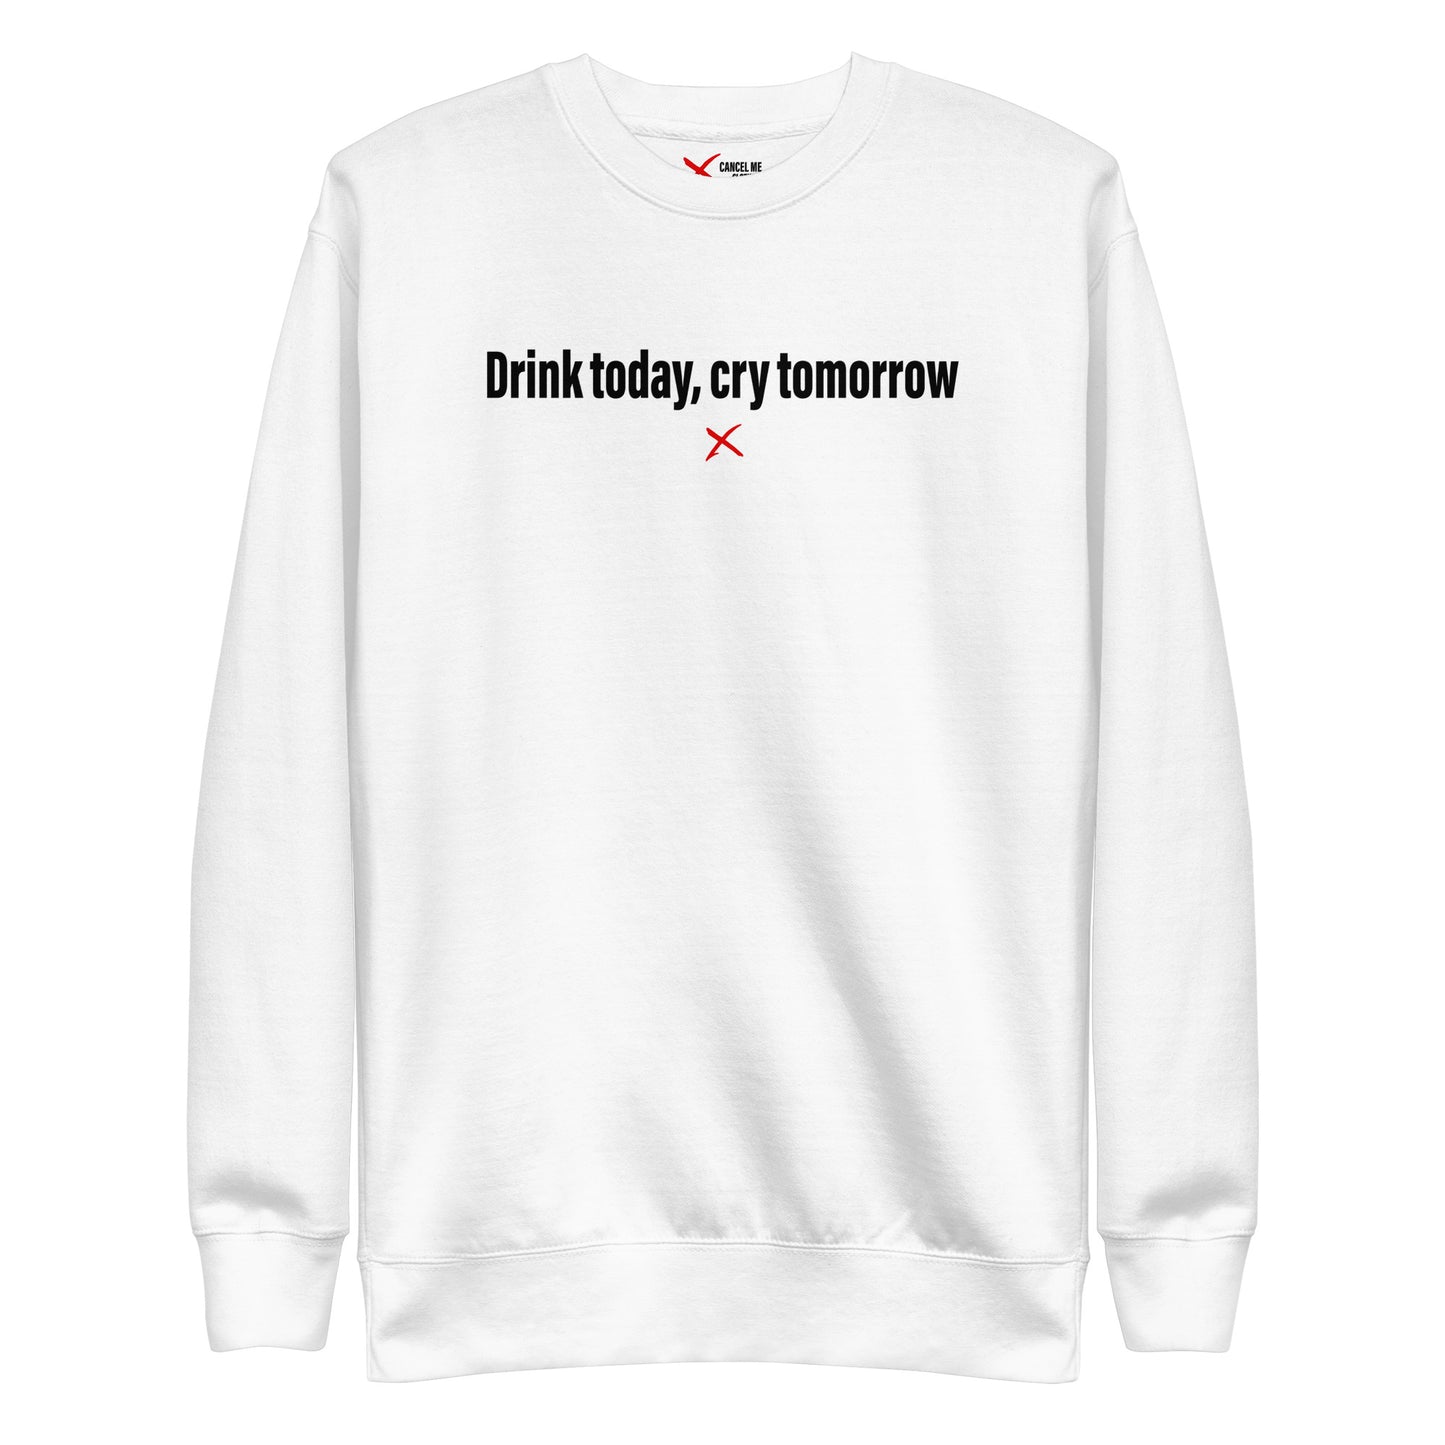 Drink today, cry tomorrow - Sweatshirt